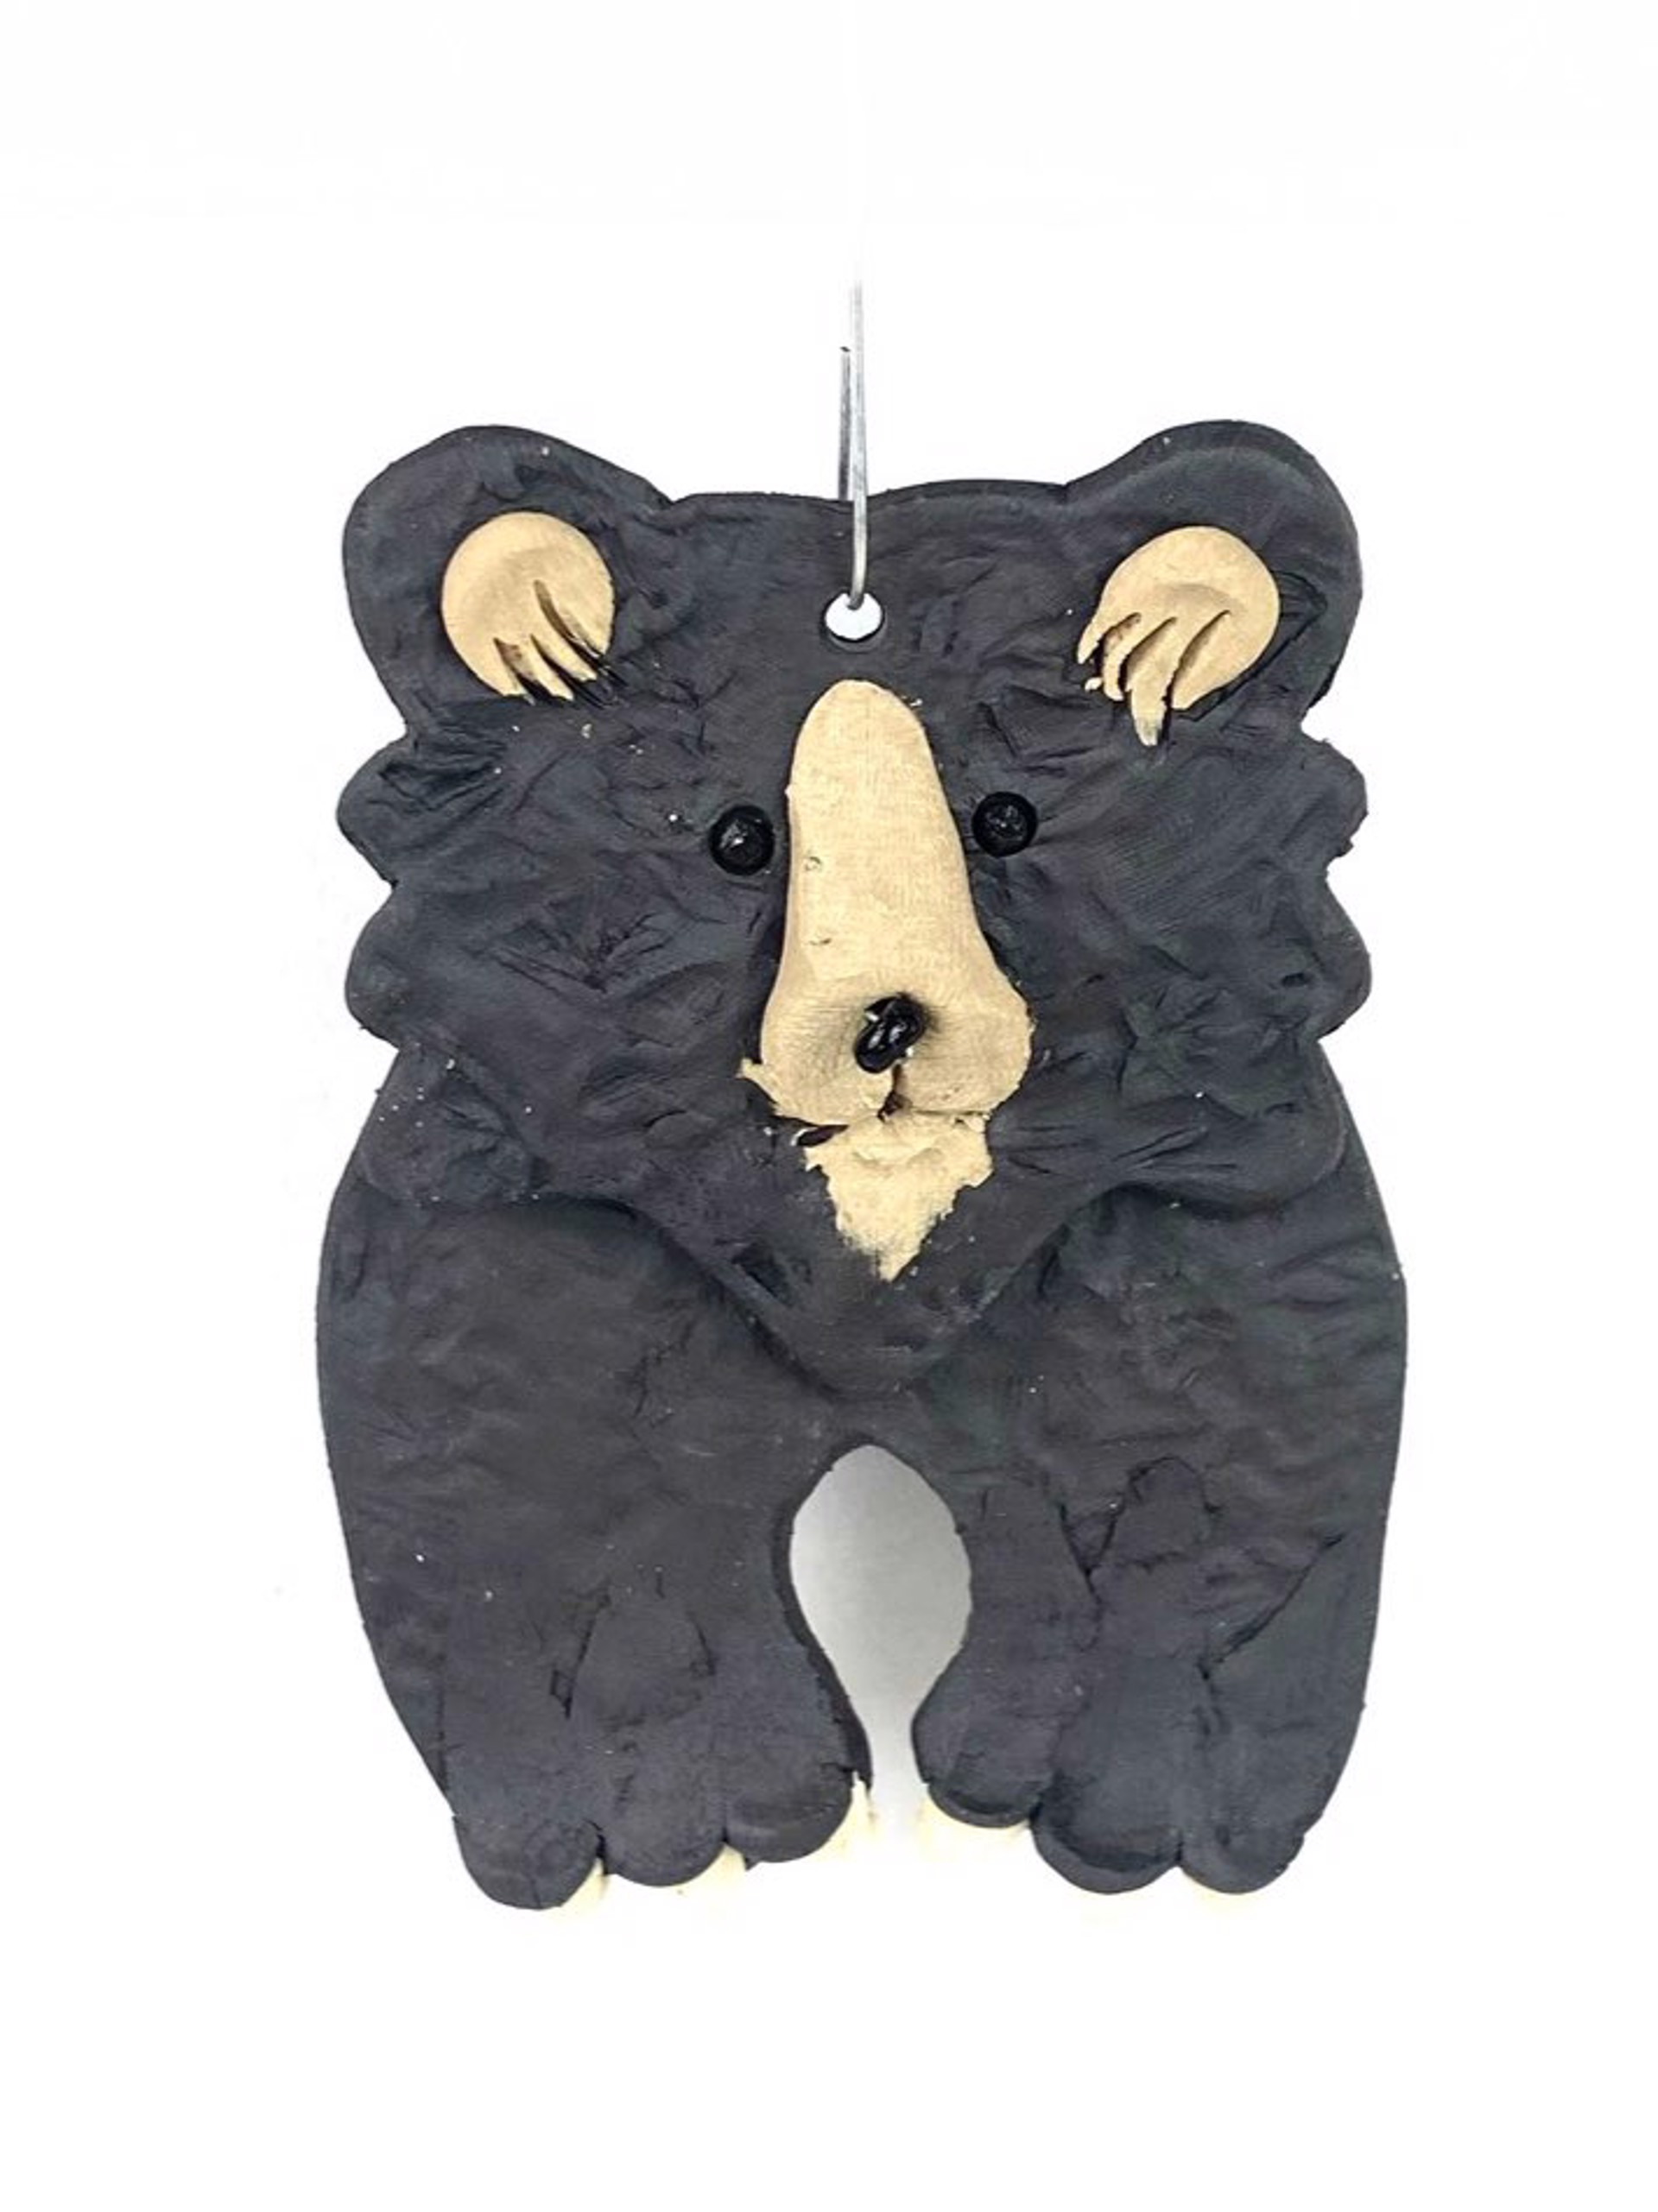 Bear Ornament by Nancy Jacobsohn